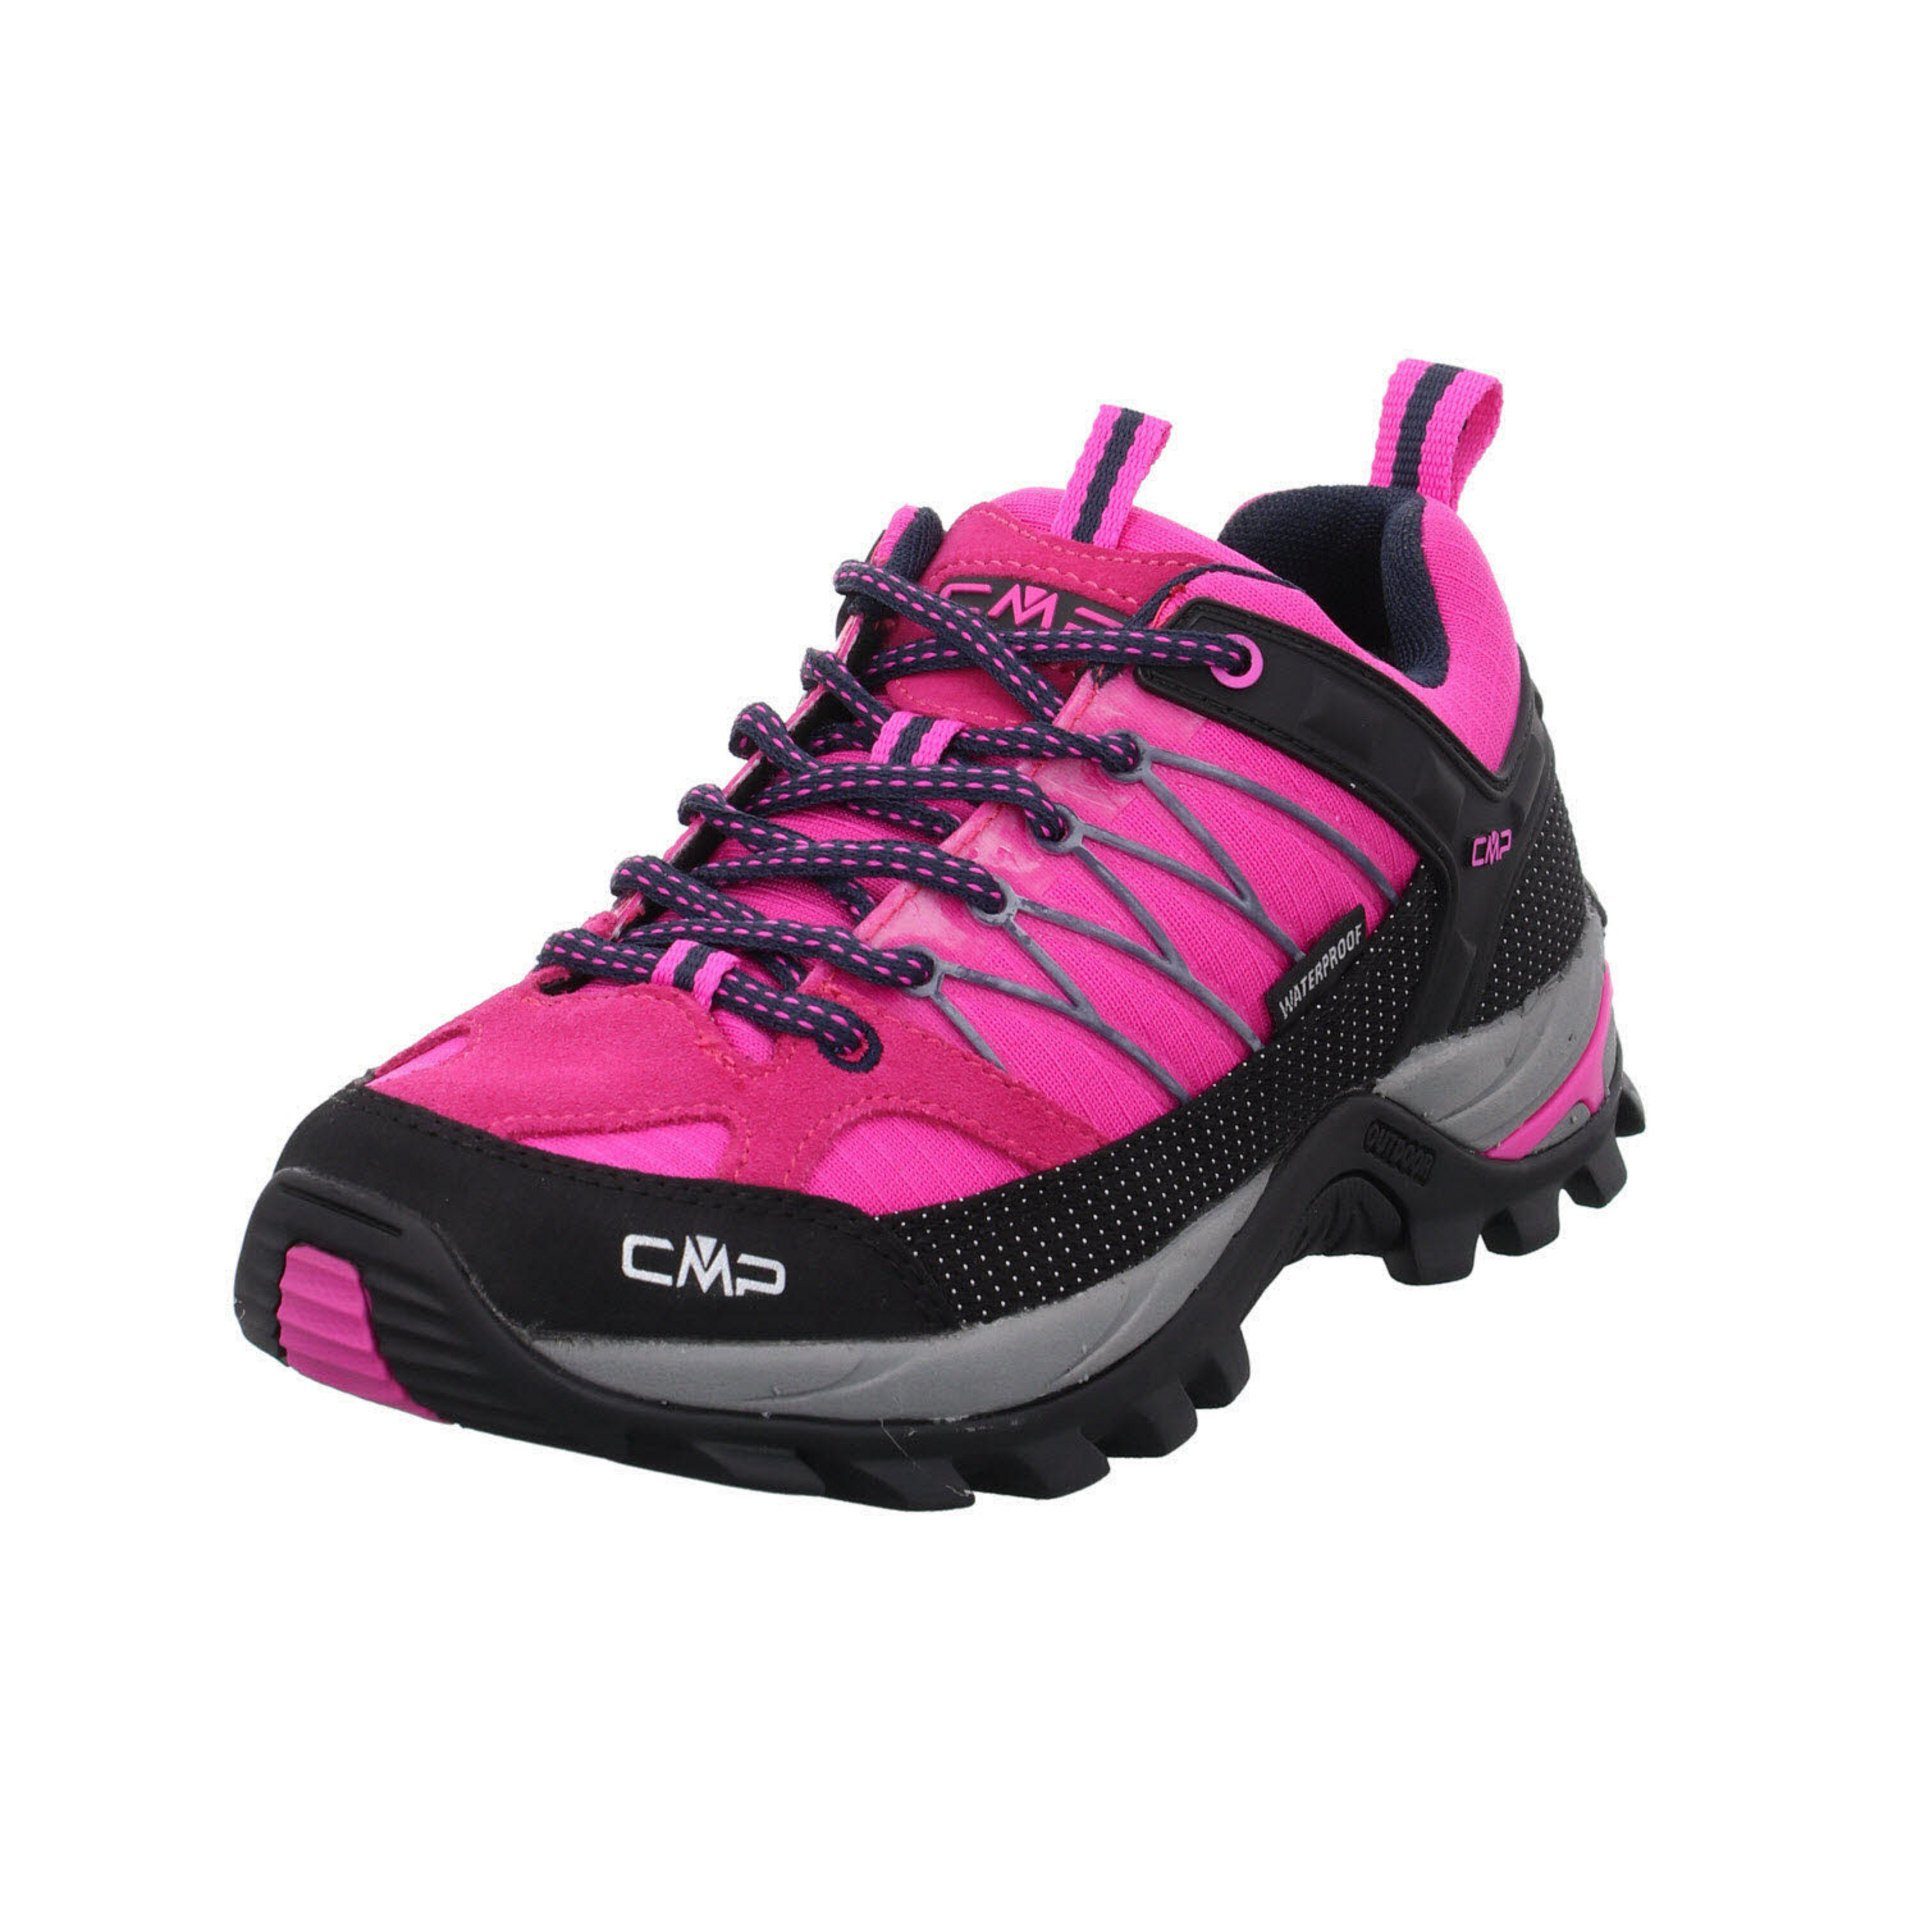 Neue Ware eingetroffen! CMP Damen Schuhe fluo-b.blue Leder-/Textilkombination Low pink Rigel (03201886) Outdoorschuh Outdoor Outdoorschuh